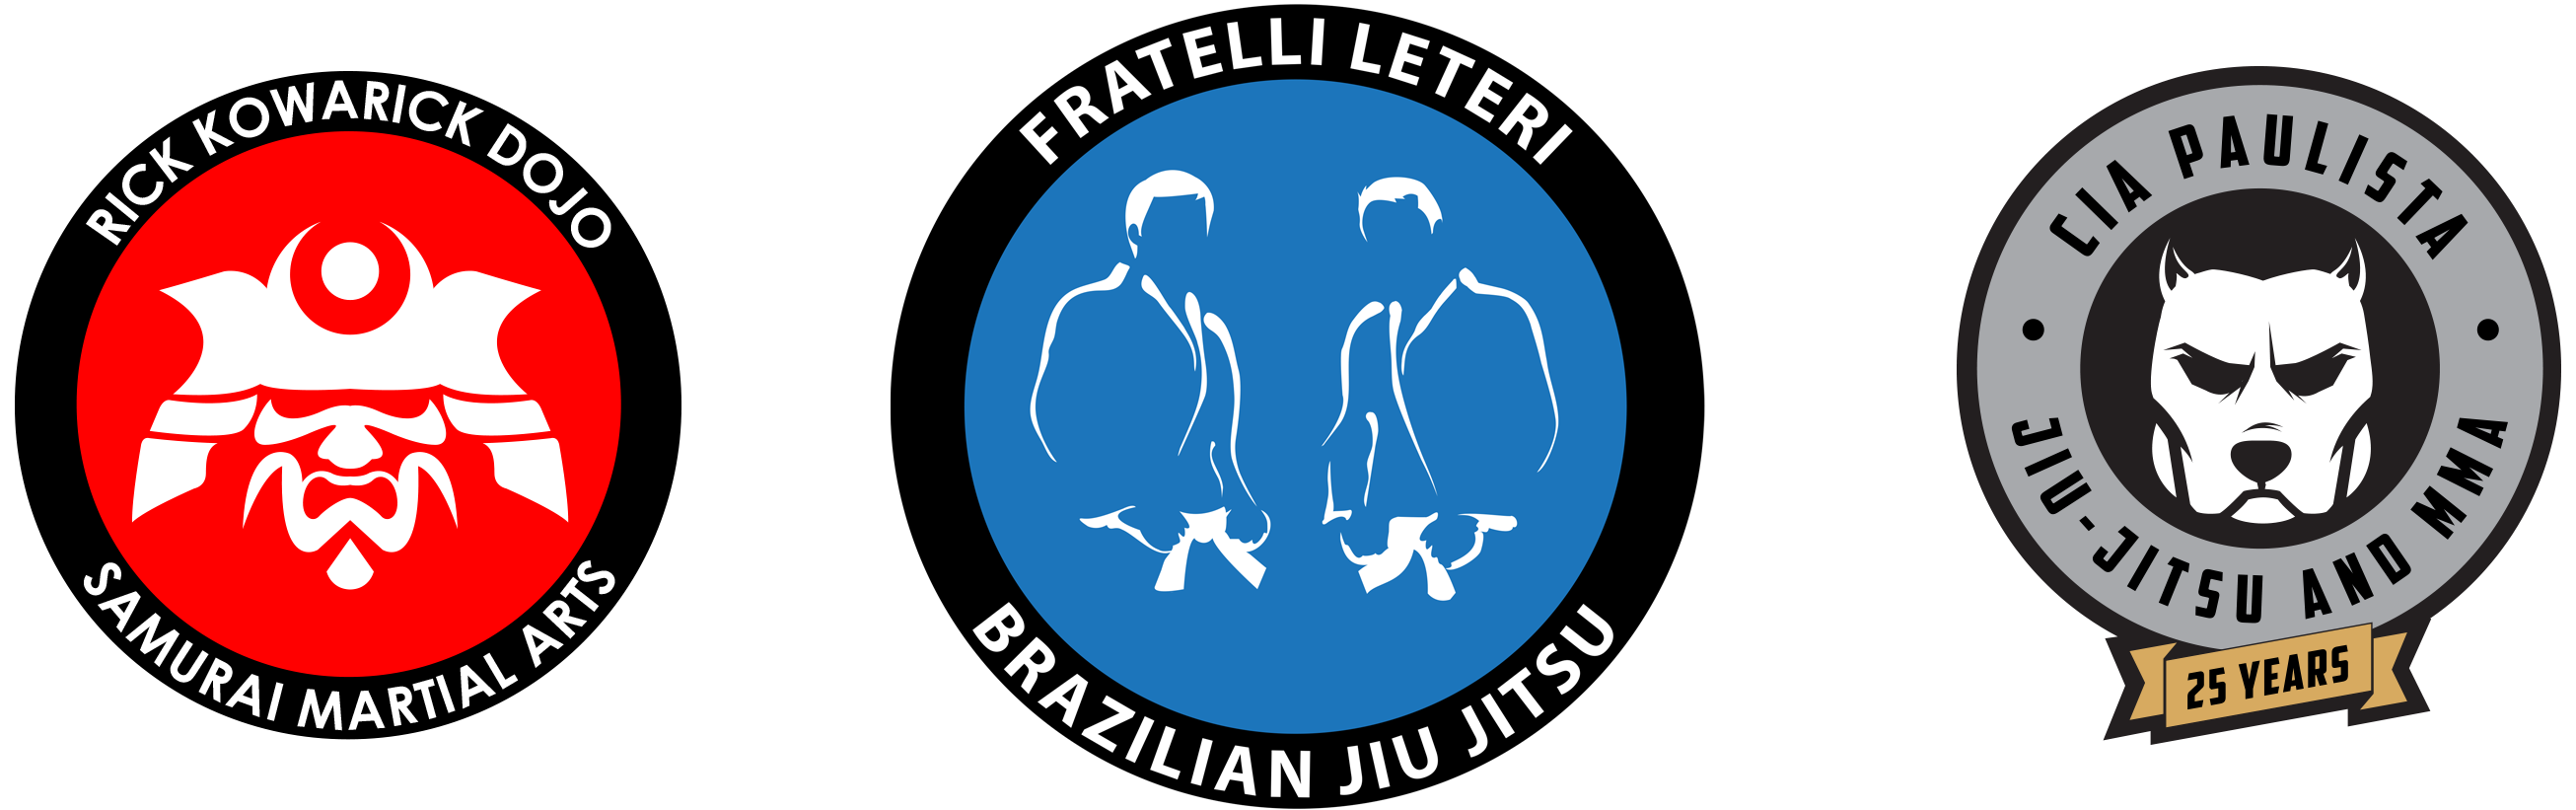 Fratelli Leteri - Scuola di Jiu Jitsu Brasiliano e Grappling a Verona.